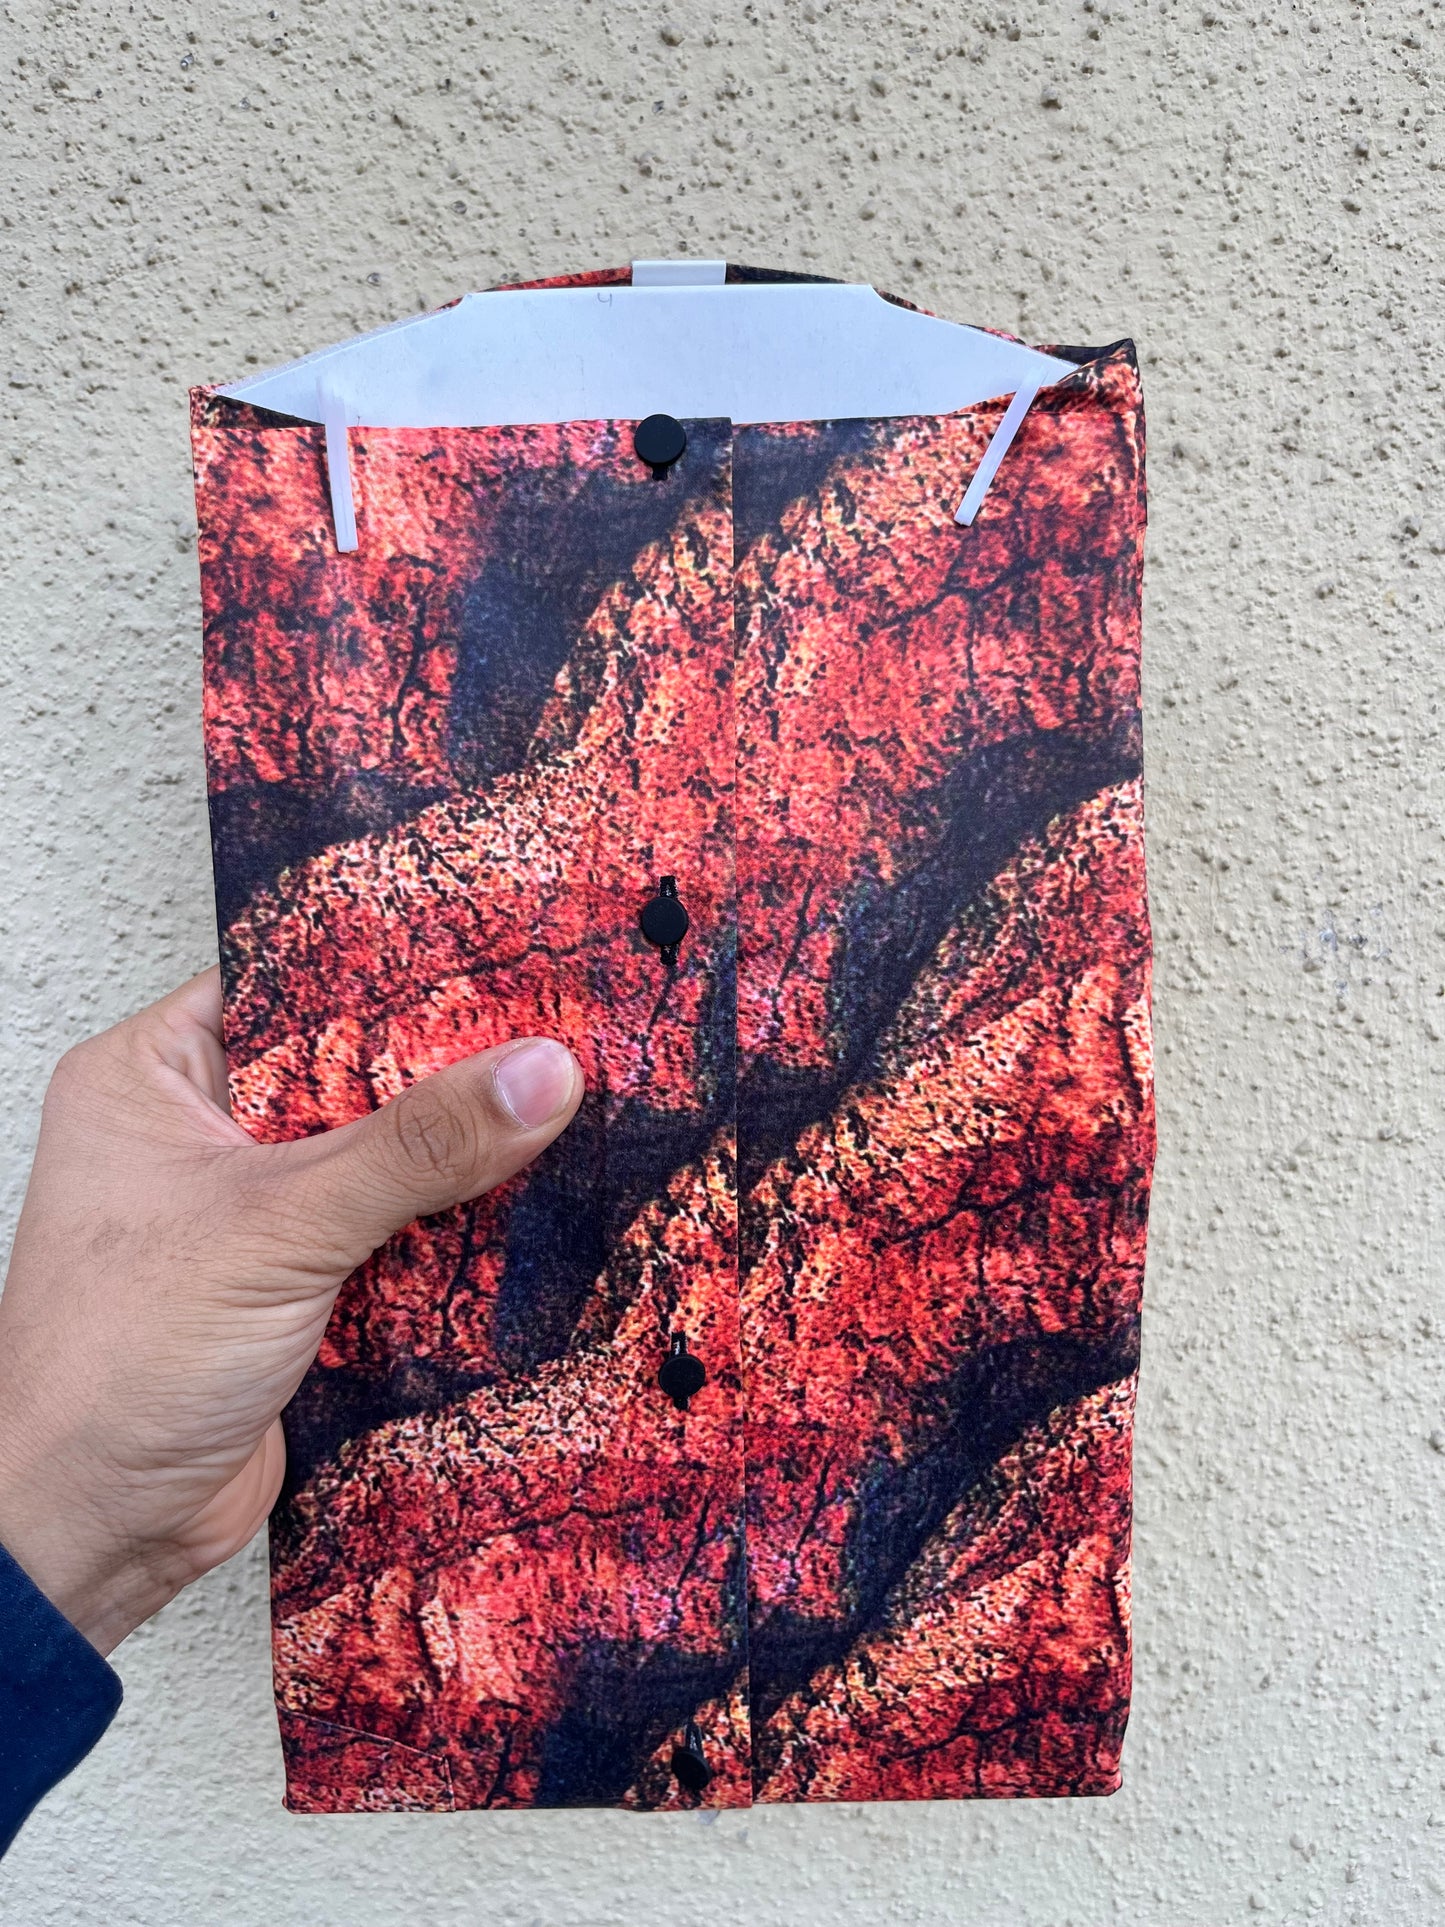 Volcano digital print full shirt